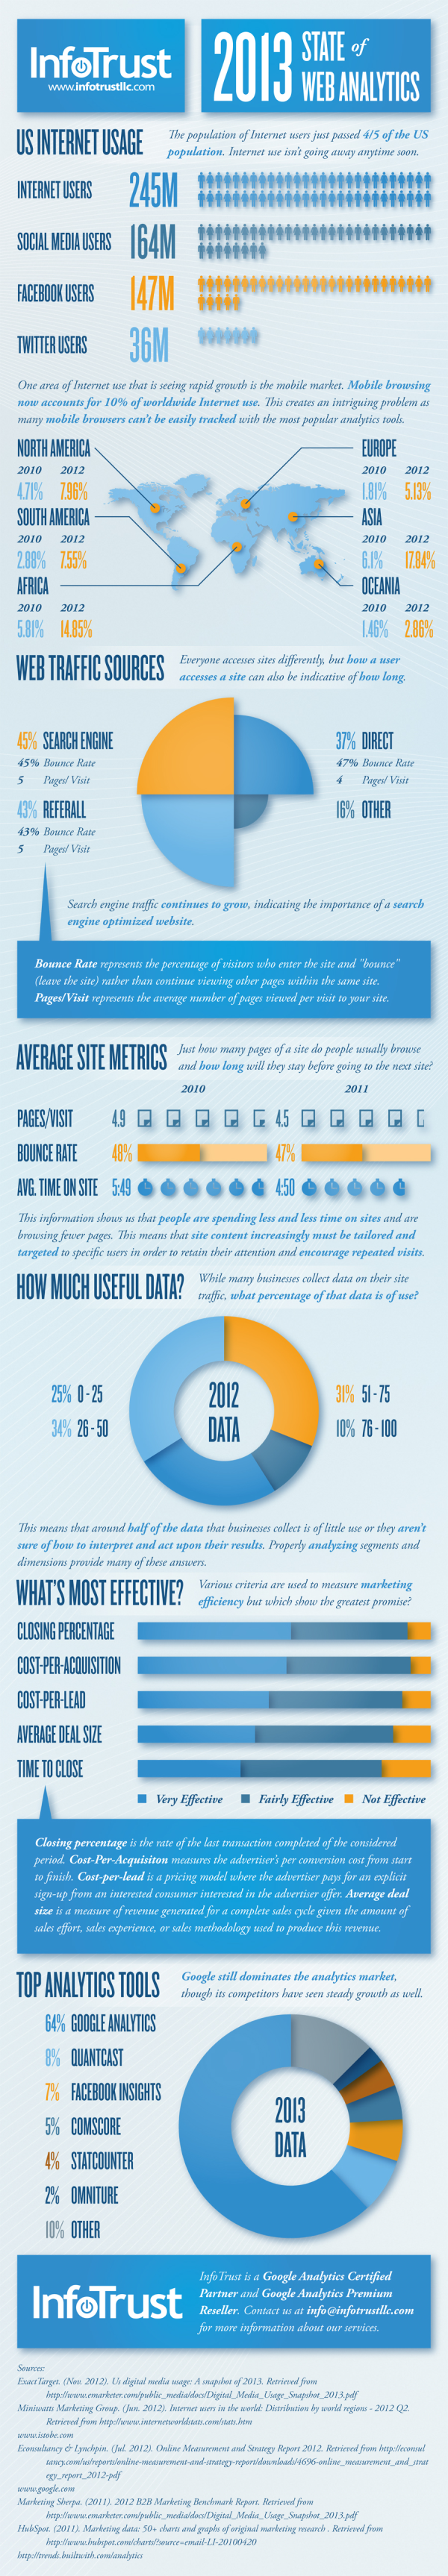 2013 State of Web Analytics Infographic